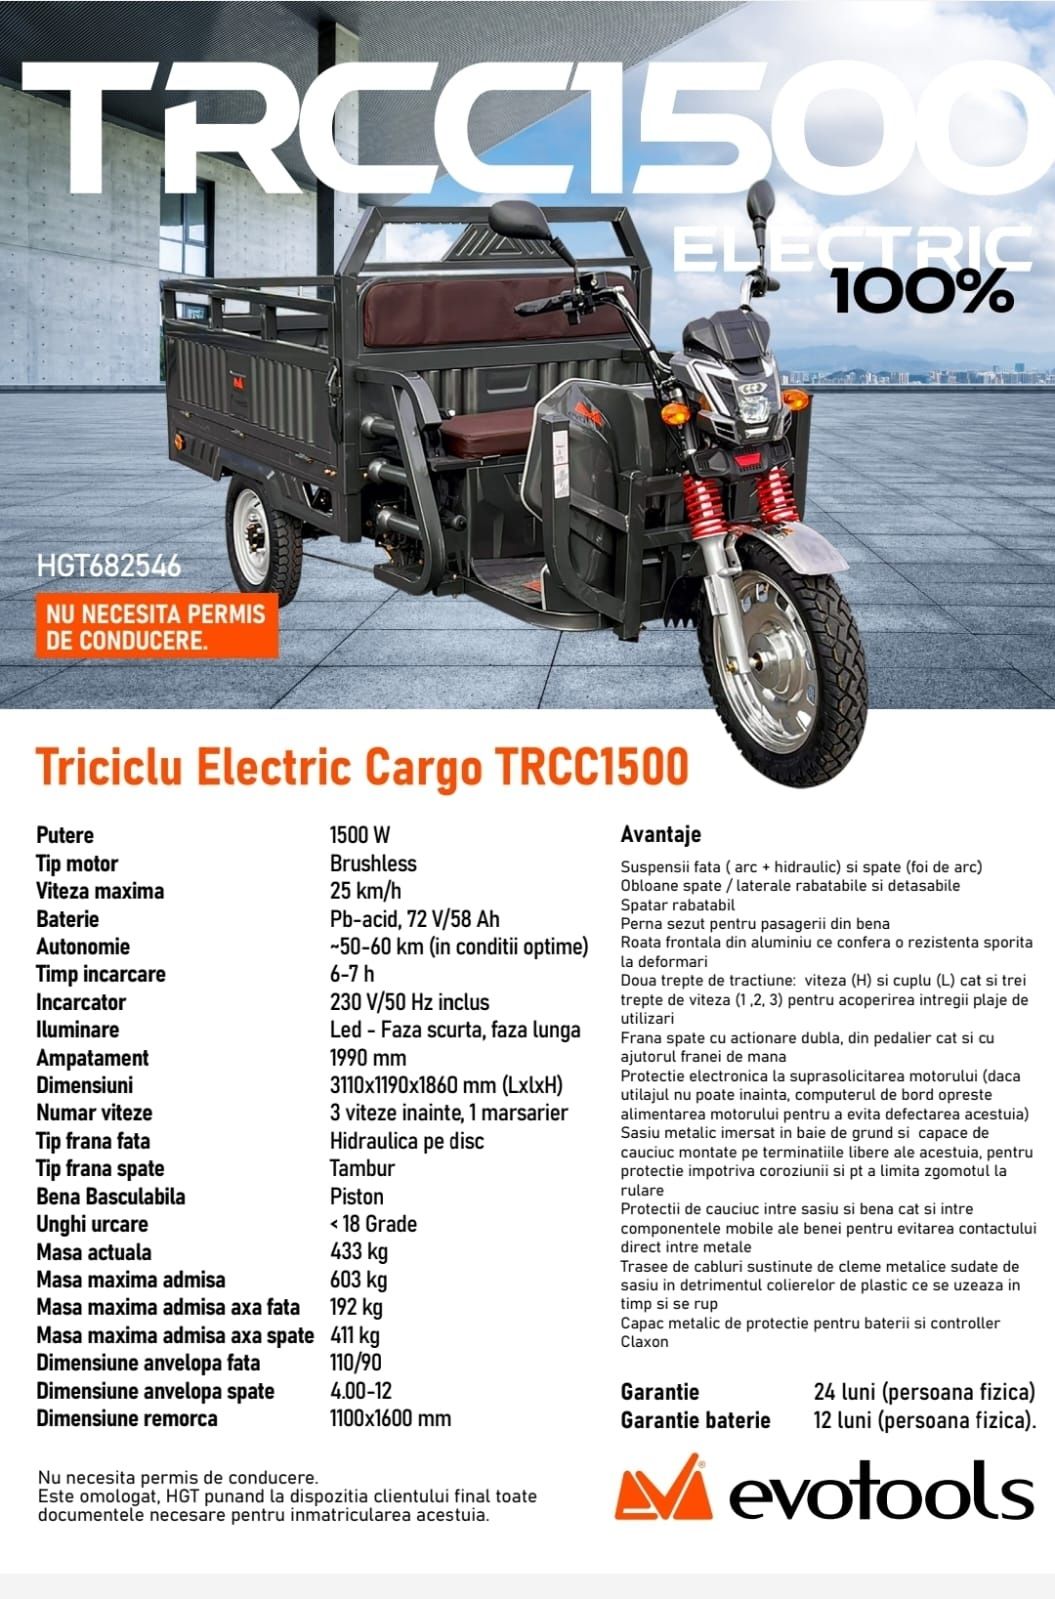 Triciclu electric